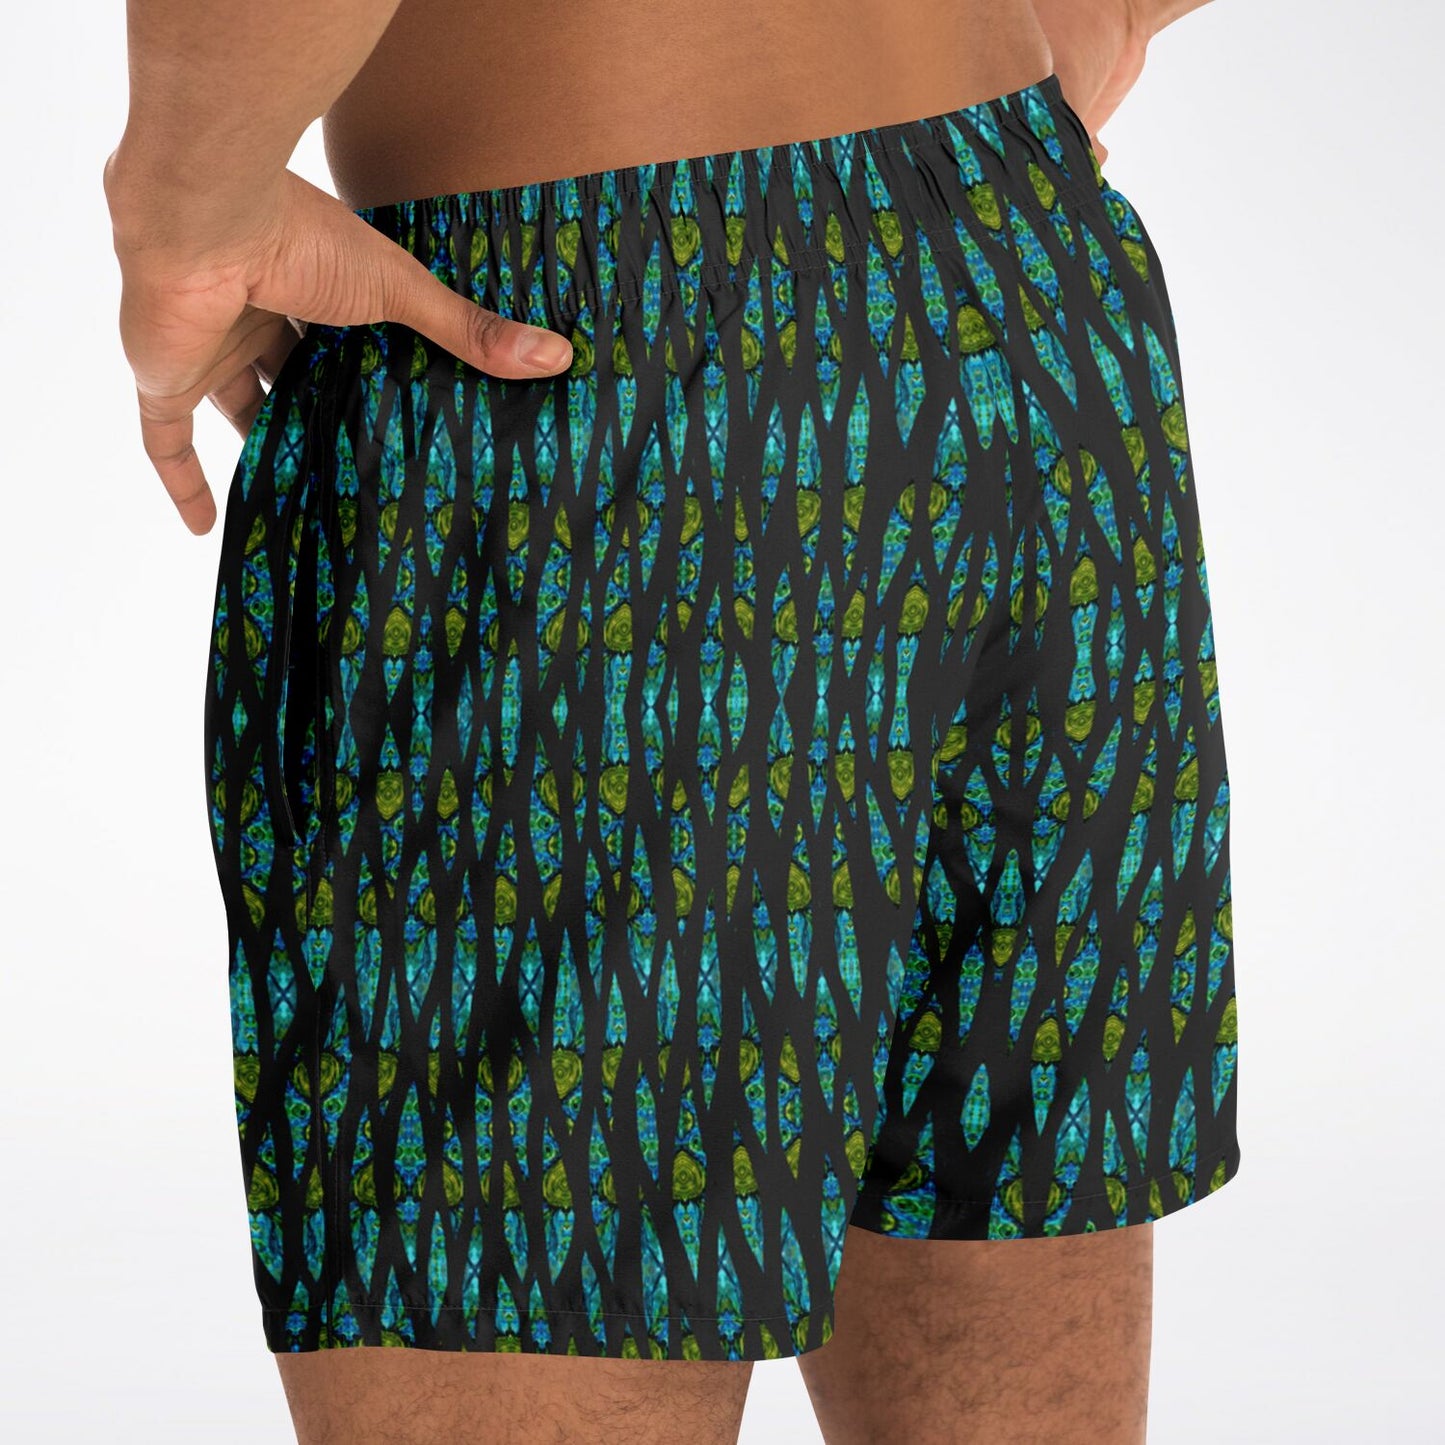 swimming trunks with black pattern design for men